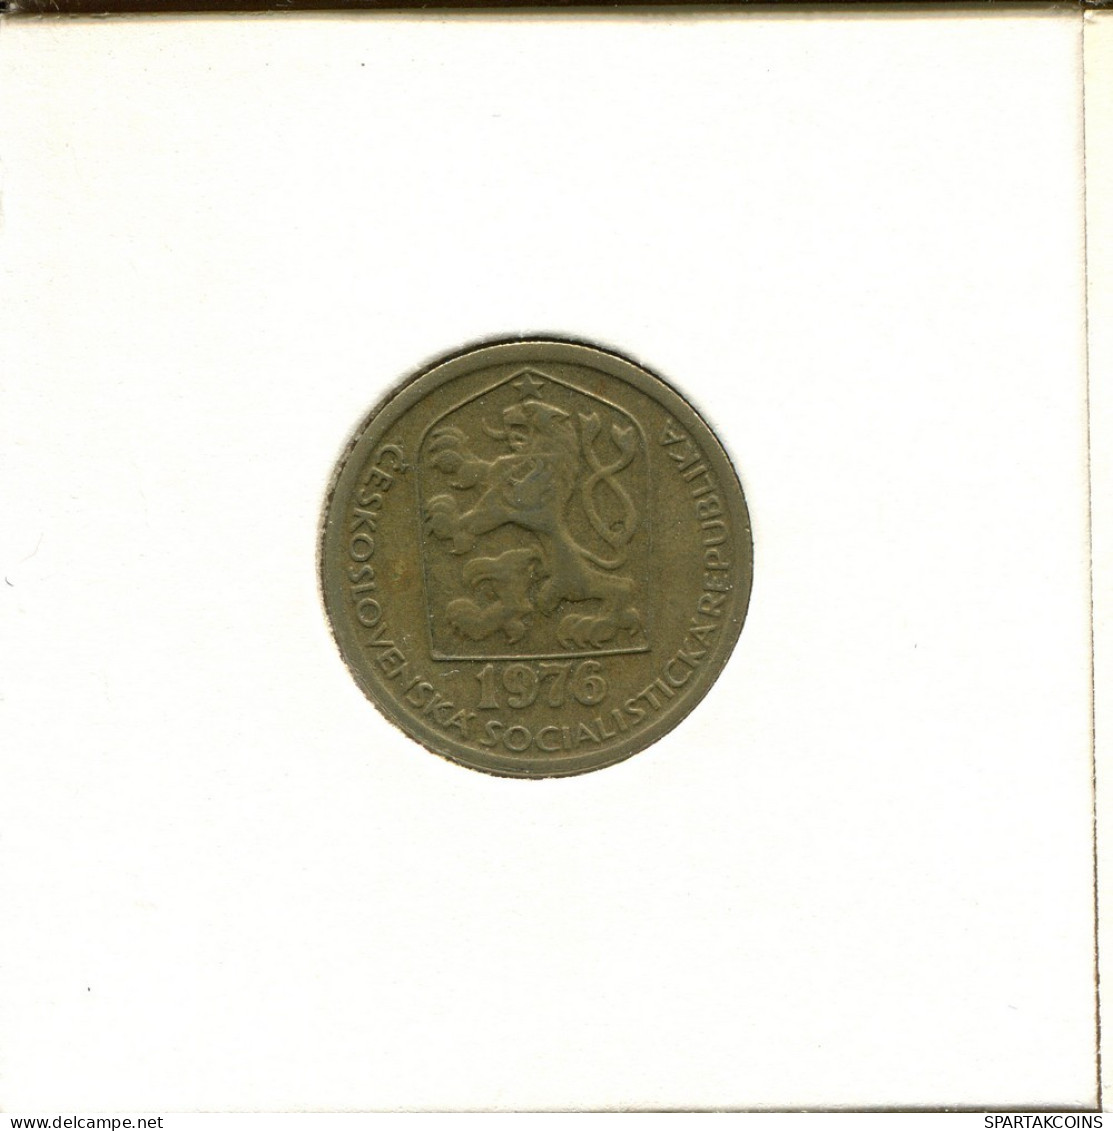 20 HALERU 1976 CZECHOSLOVAKIA Coin #AS945.U.A - Cecoslovacchia